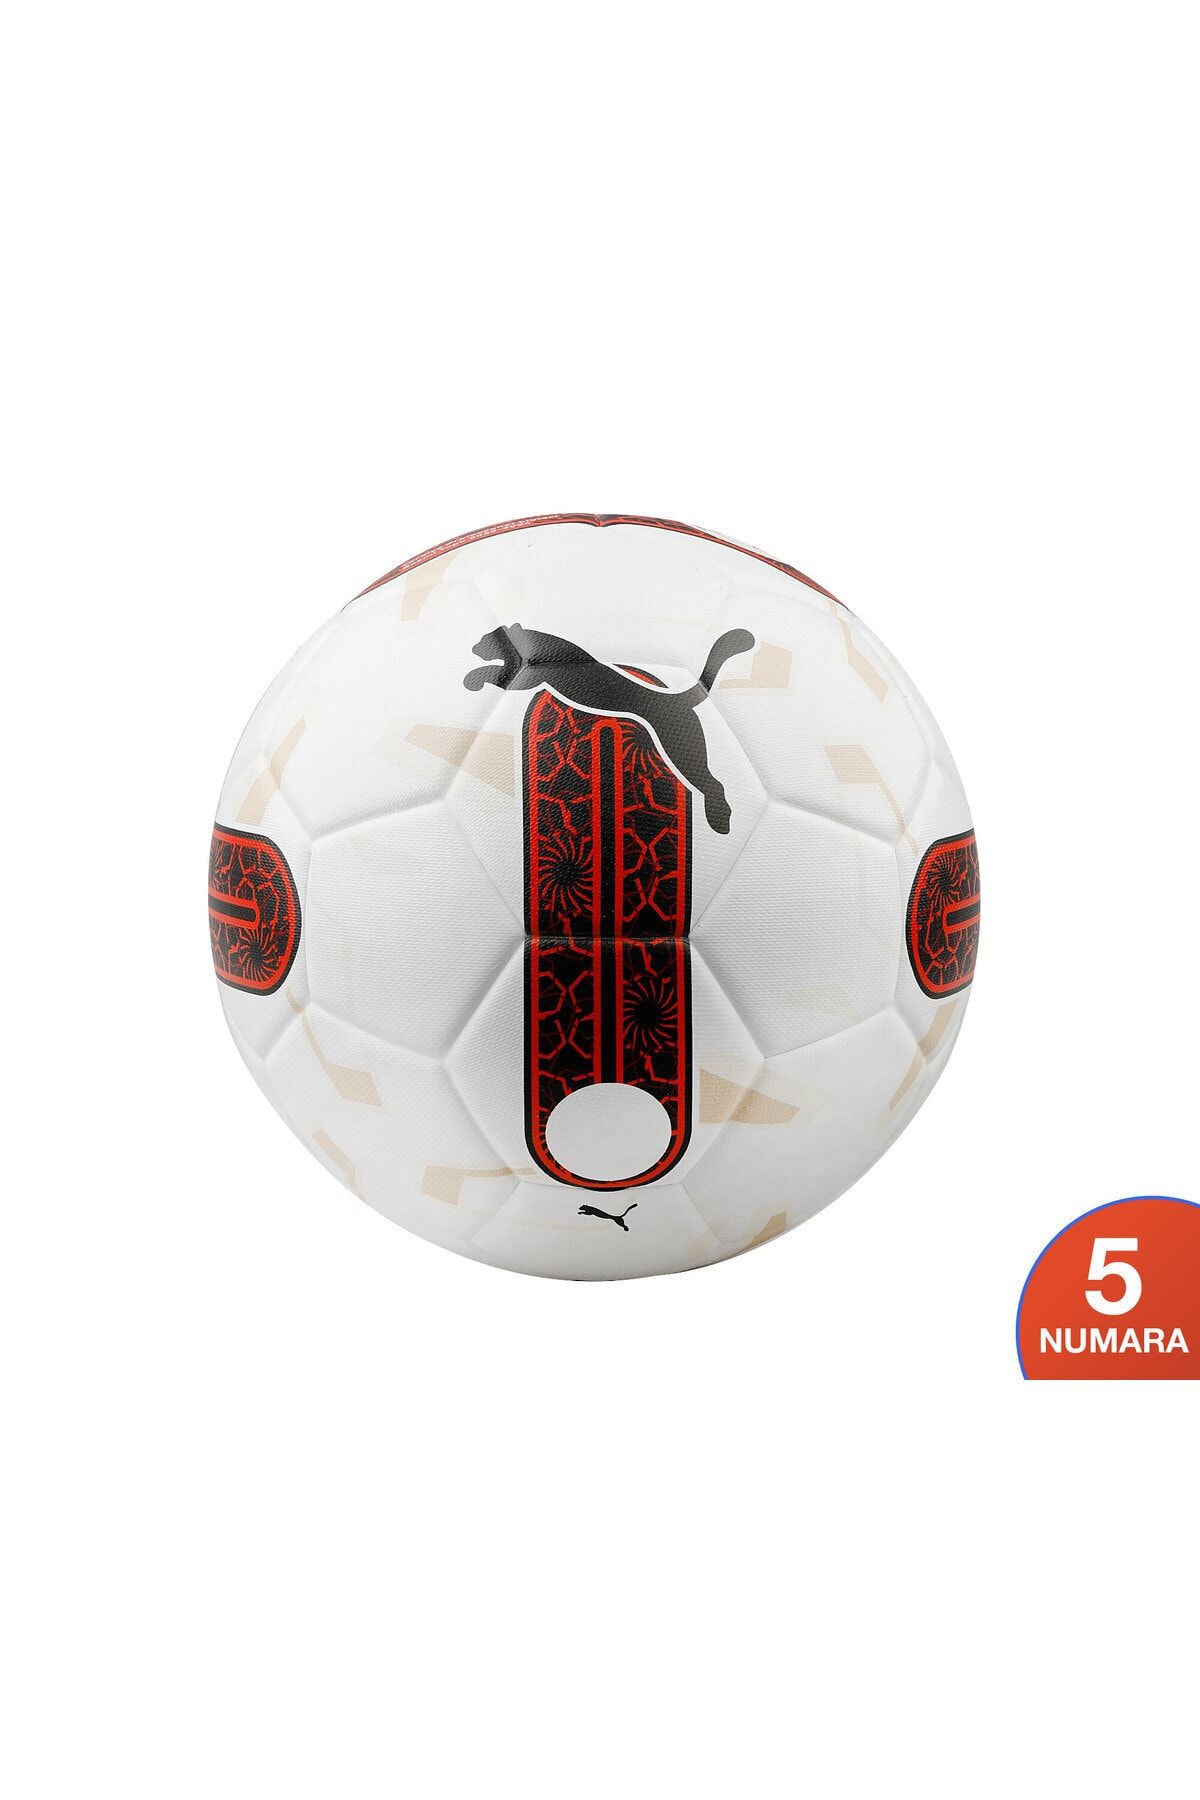 Puma Orbita Süper Lig 3 (Fifa Quality) Futbol Topu 8419401 Krem